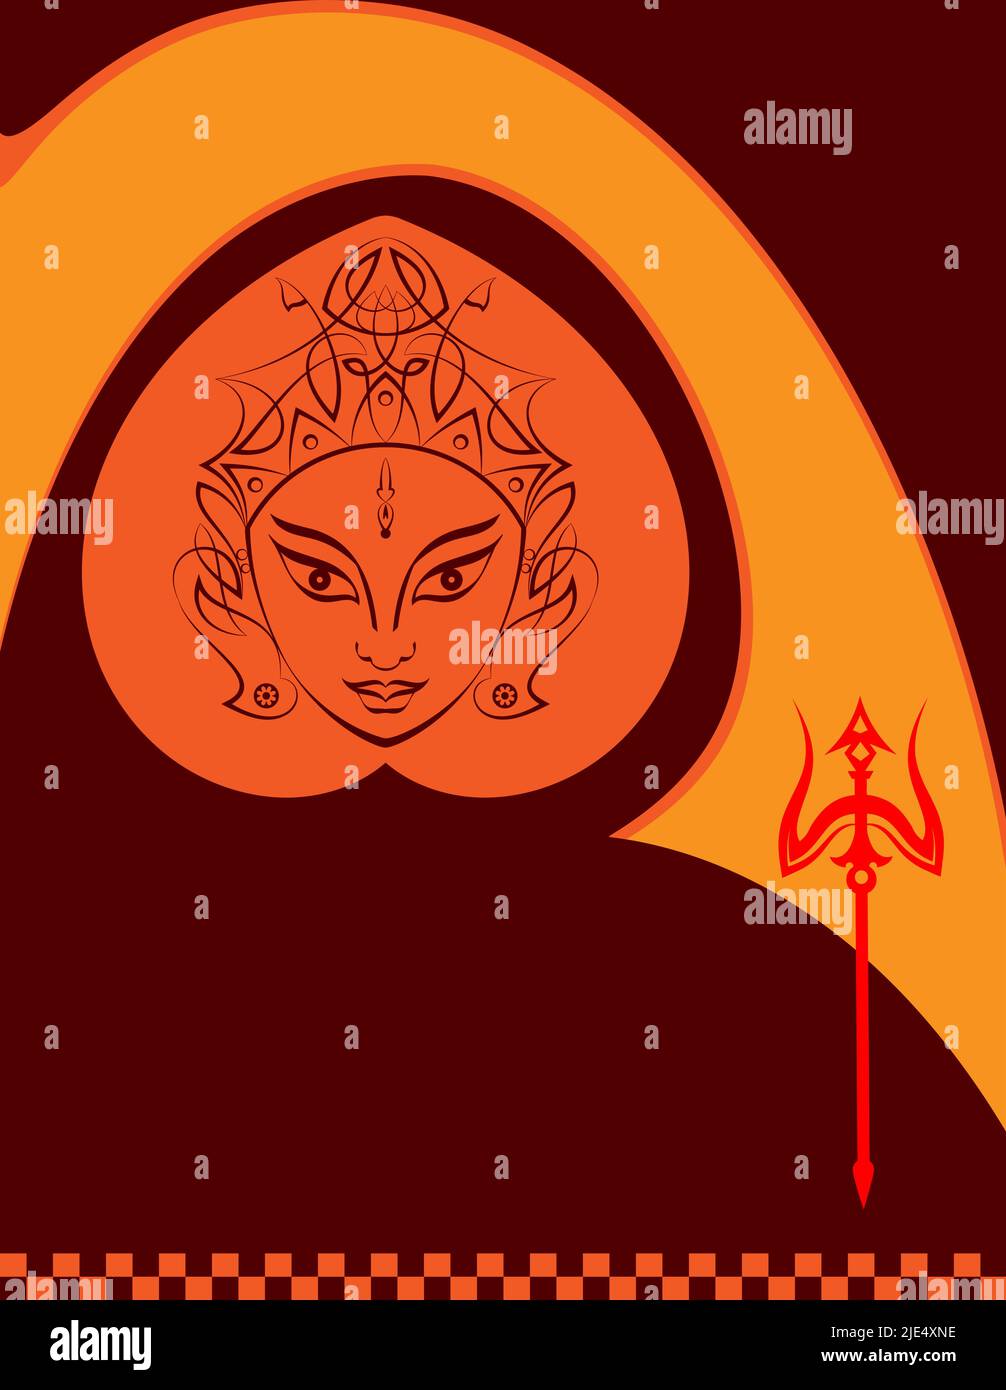 Durga Goddess Of Power, Divine Mother Of The Universe Design Vector Art Illustration Stock Vector